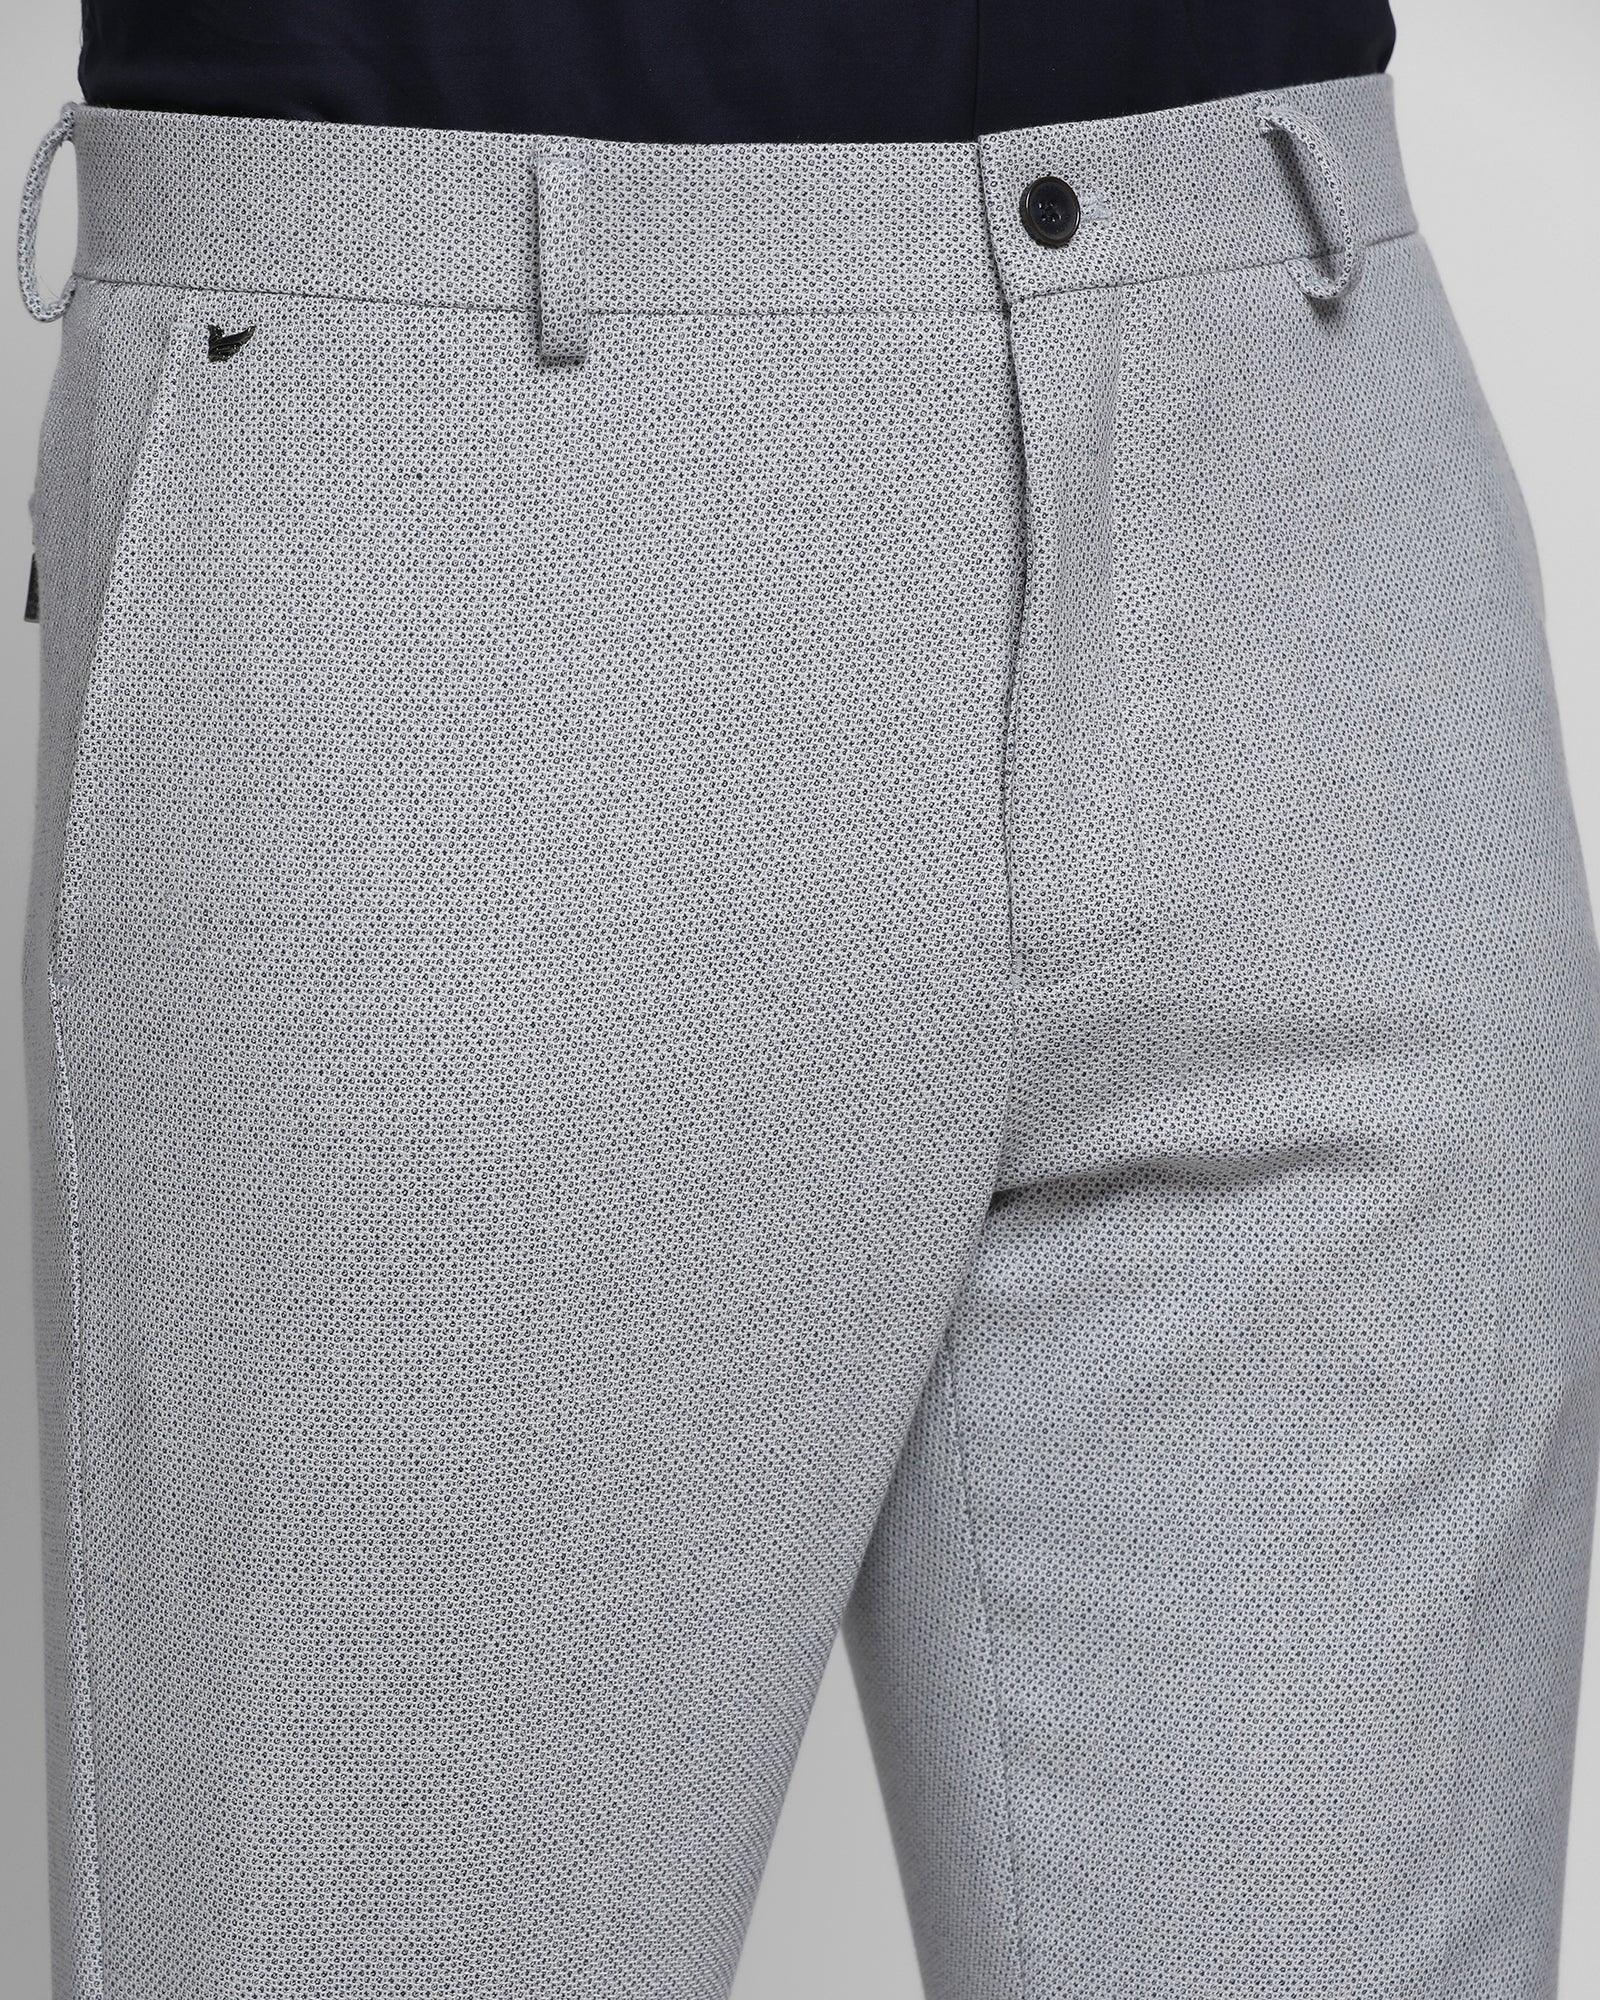 Comfort Arise Formal Blue Textured Trouser - Bentor